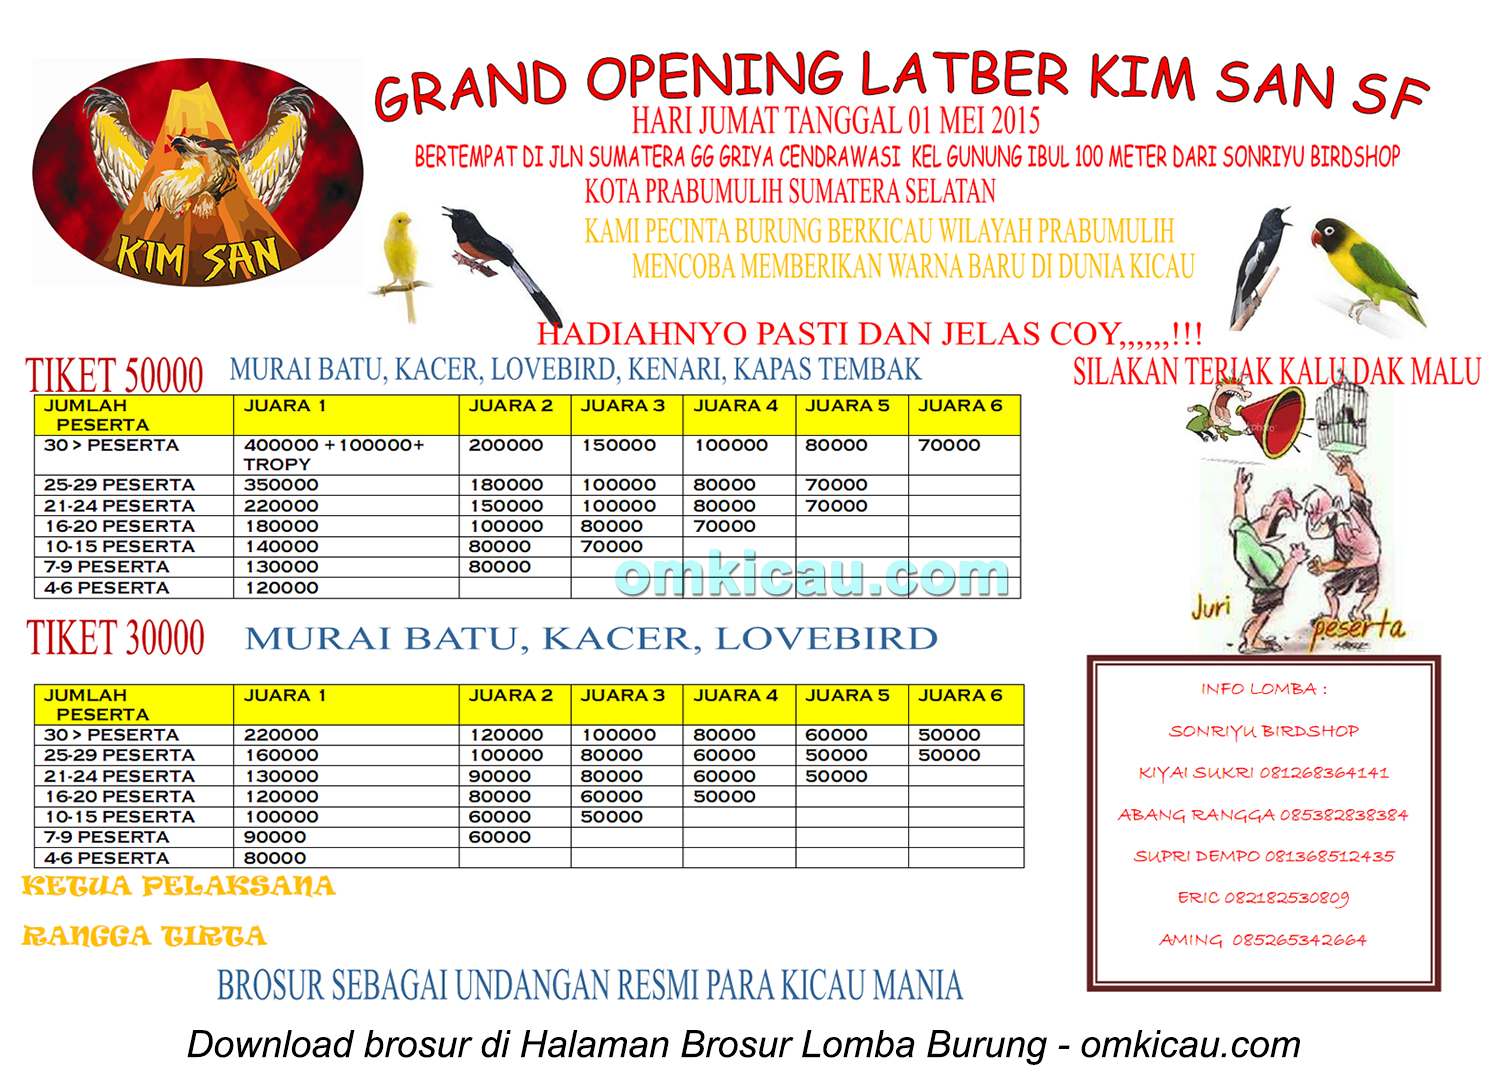 Brosur Grand Opening Latber Kim San SF, Prabumulih, 1 Mei 2015